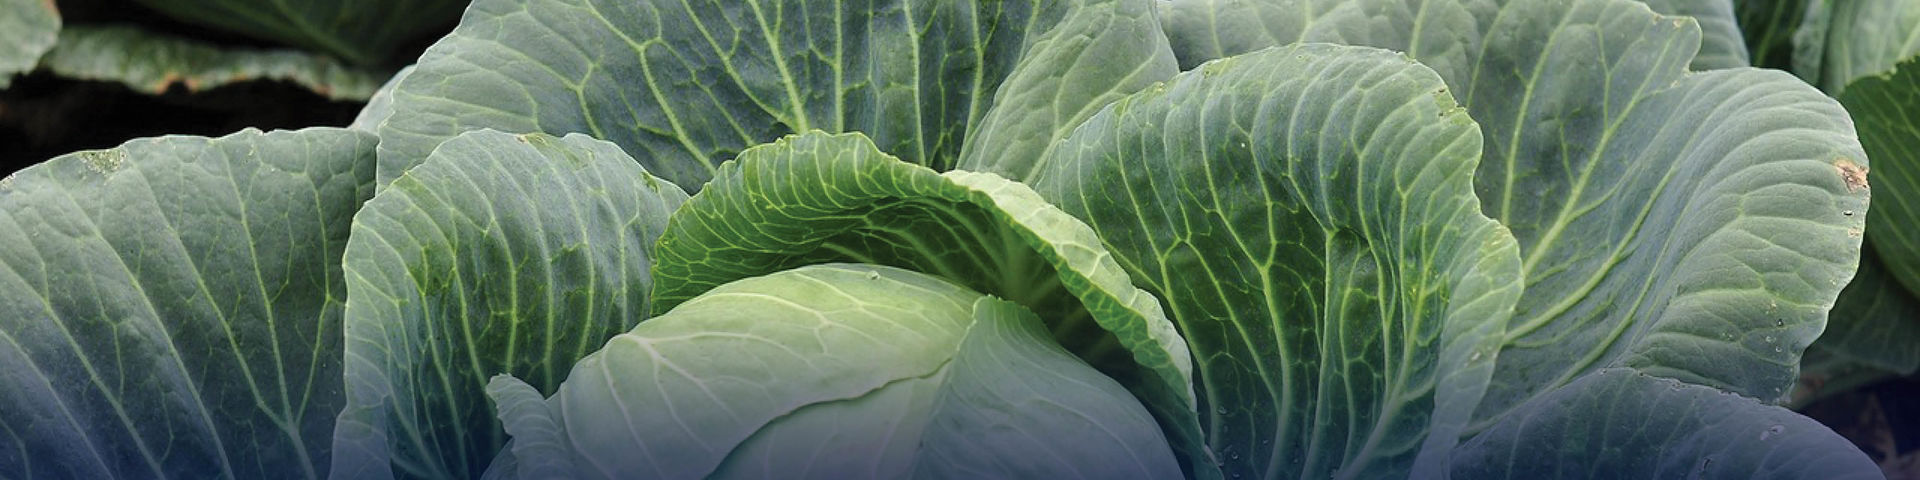 Closeup of a cabbage.